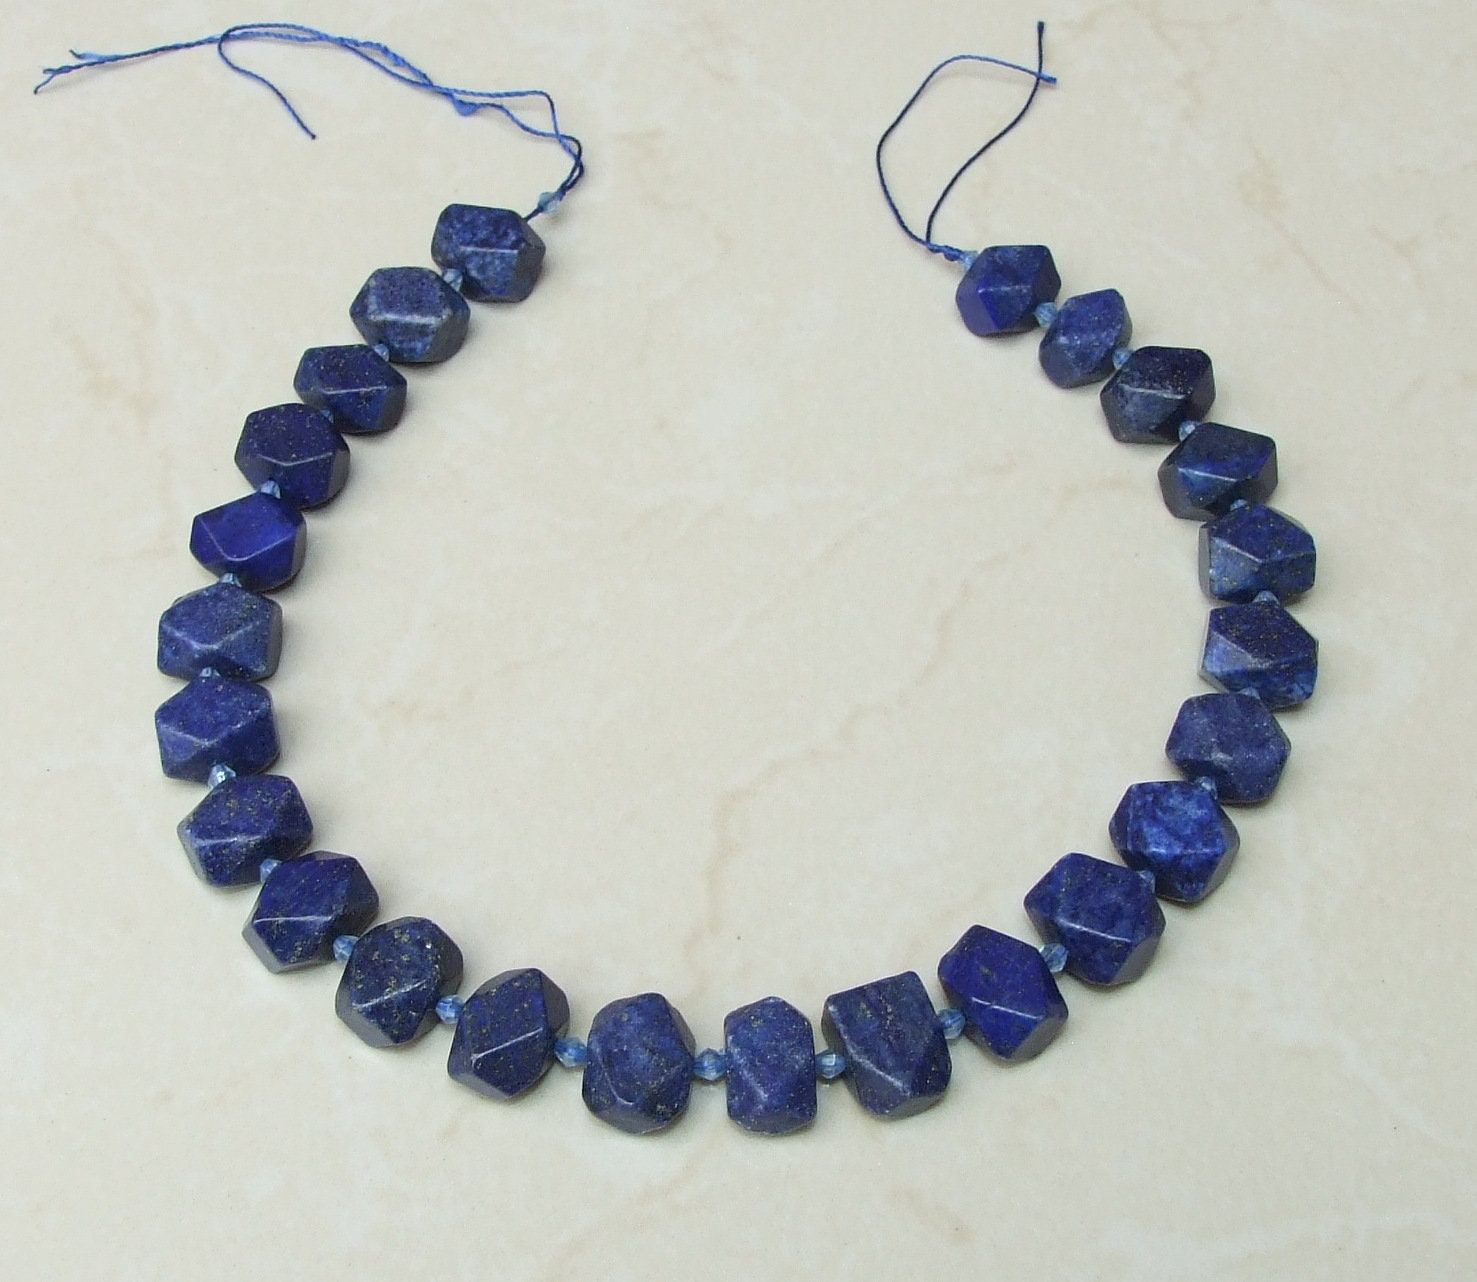 Lapis Lazuli Faceted Nugget, Lapis Pendant, Lapis Nugget, Gemstone Beads, Lapis Bead, Loose Jewelry Stones, Half Strand - 18mm to 20mm